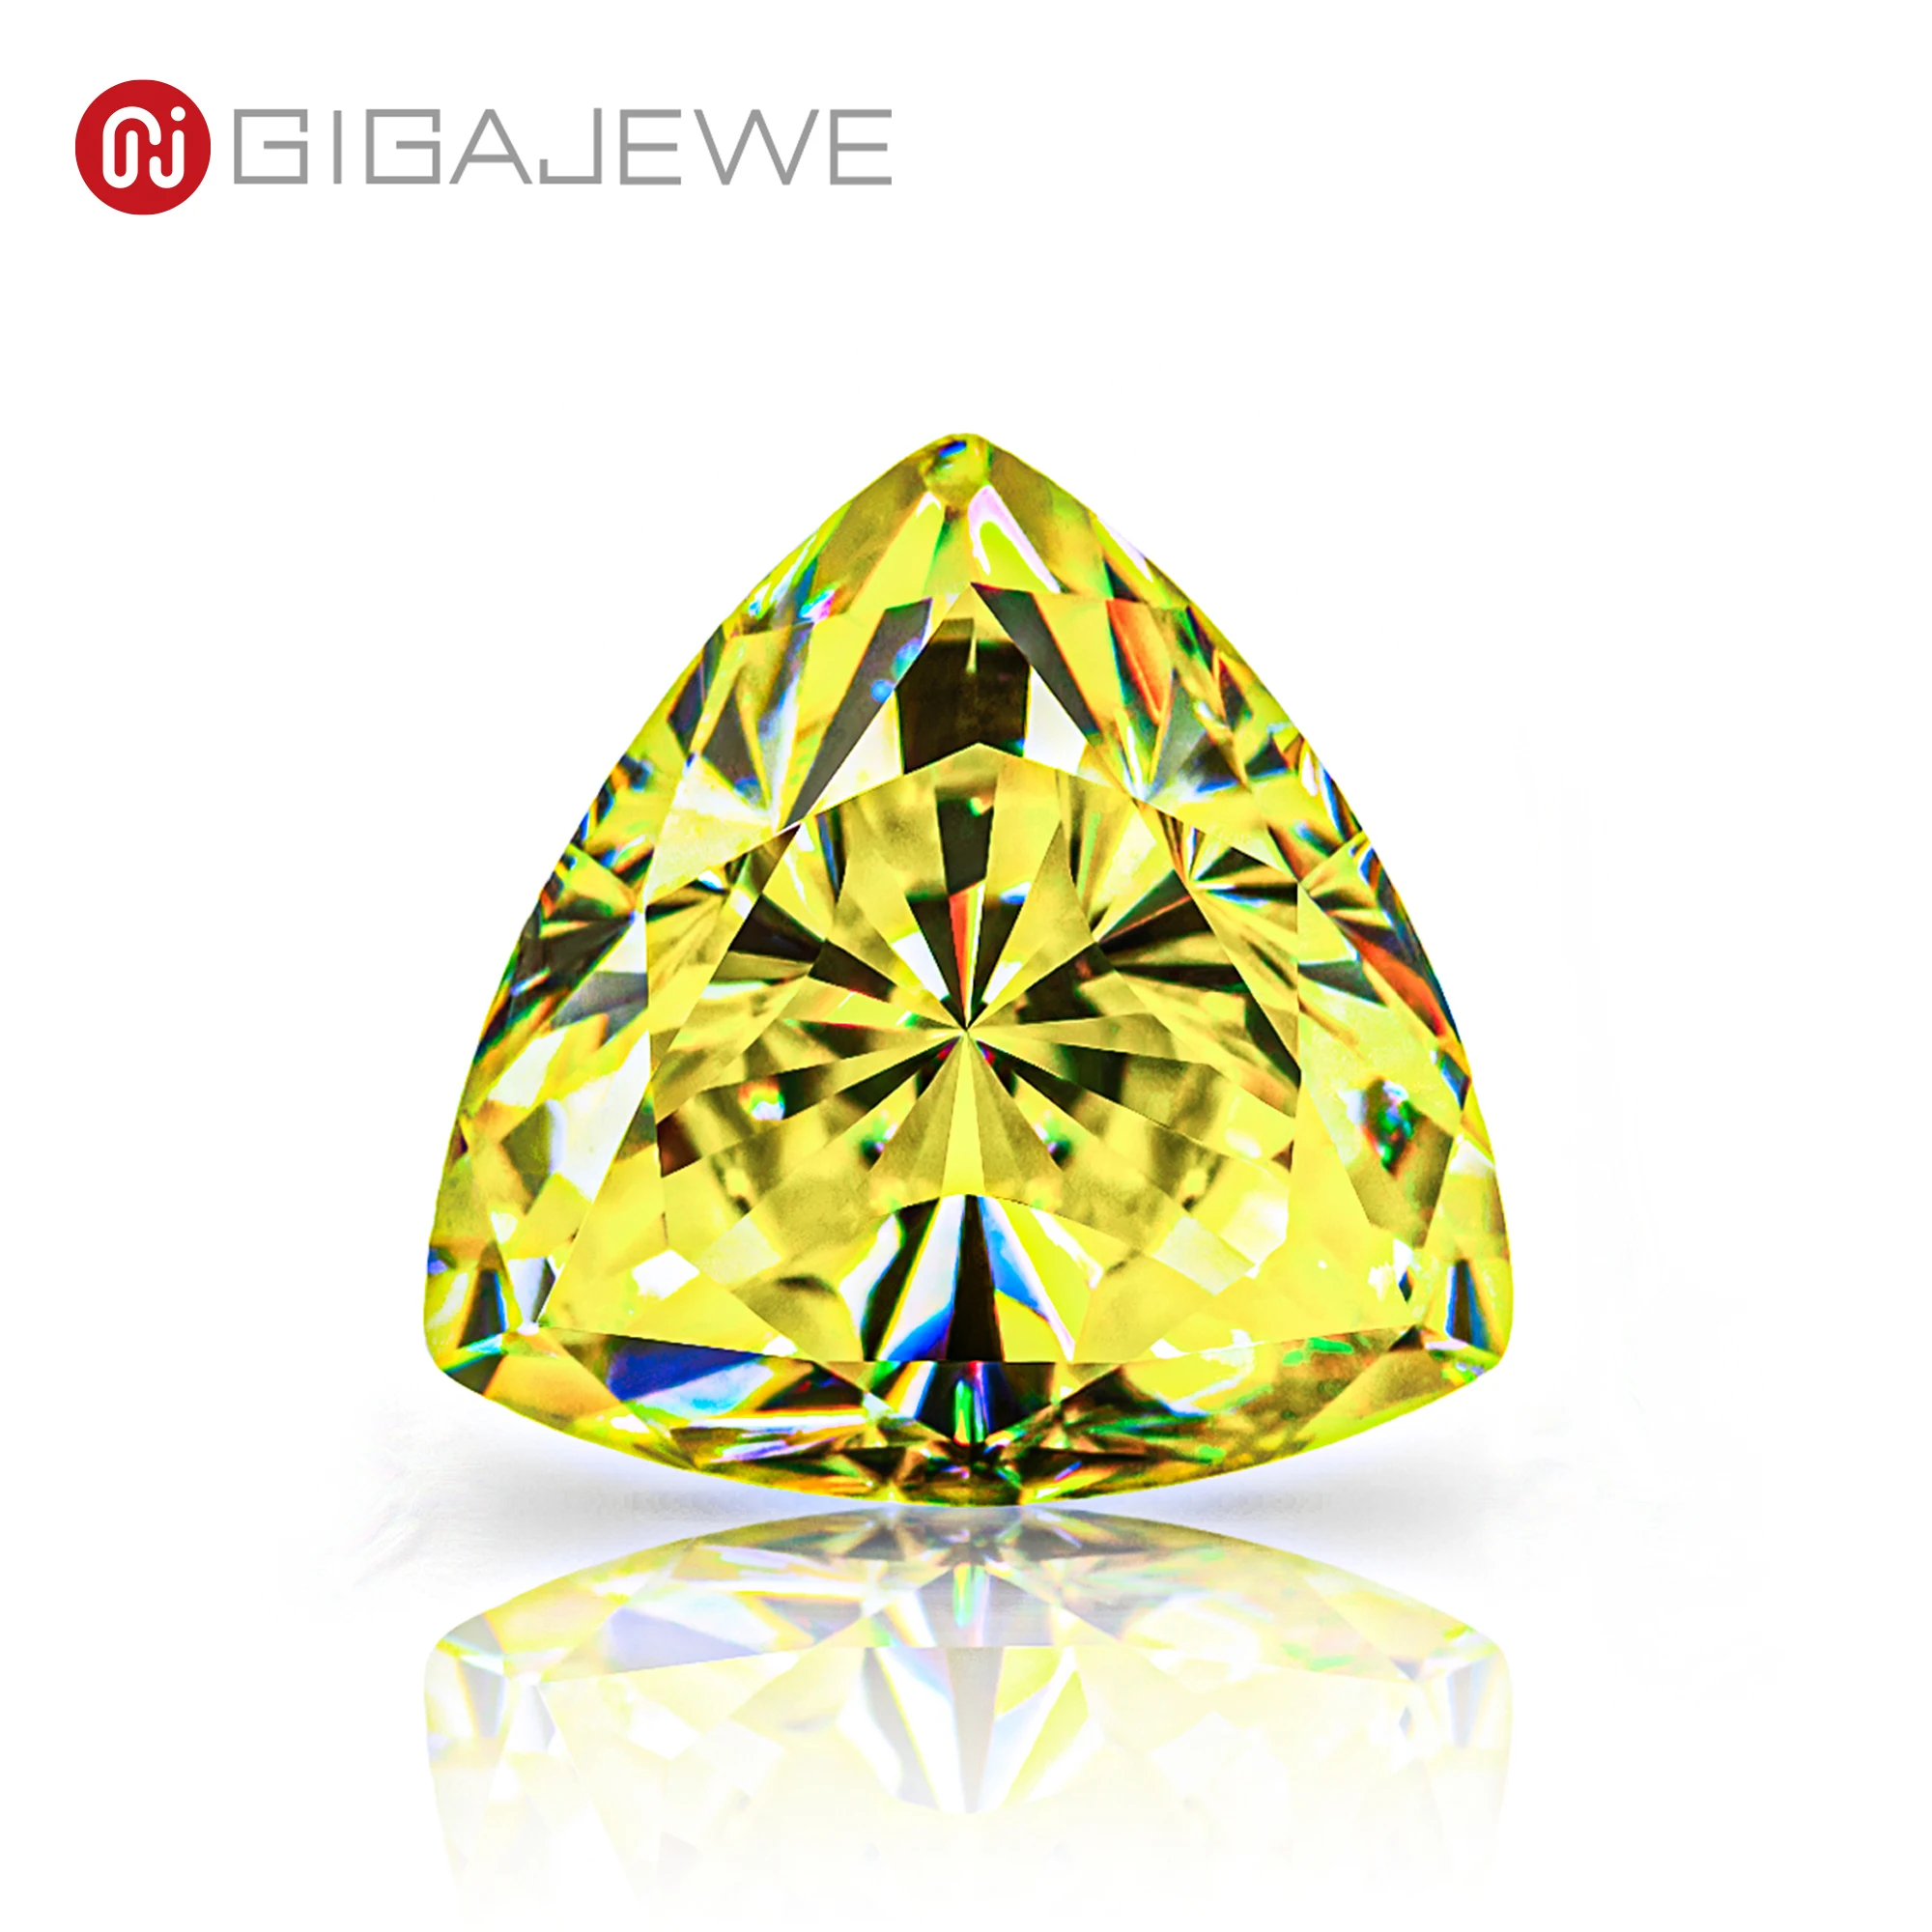 

GIGAJEWE Customized Crushed Ice Trillion Cut Vivid Yellow VVS1 Moissanite Loose Diamond Test Passed Gemstone For Jewelry Making